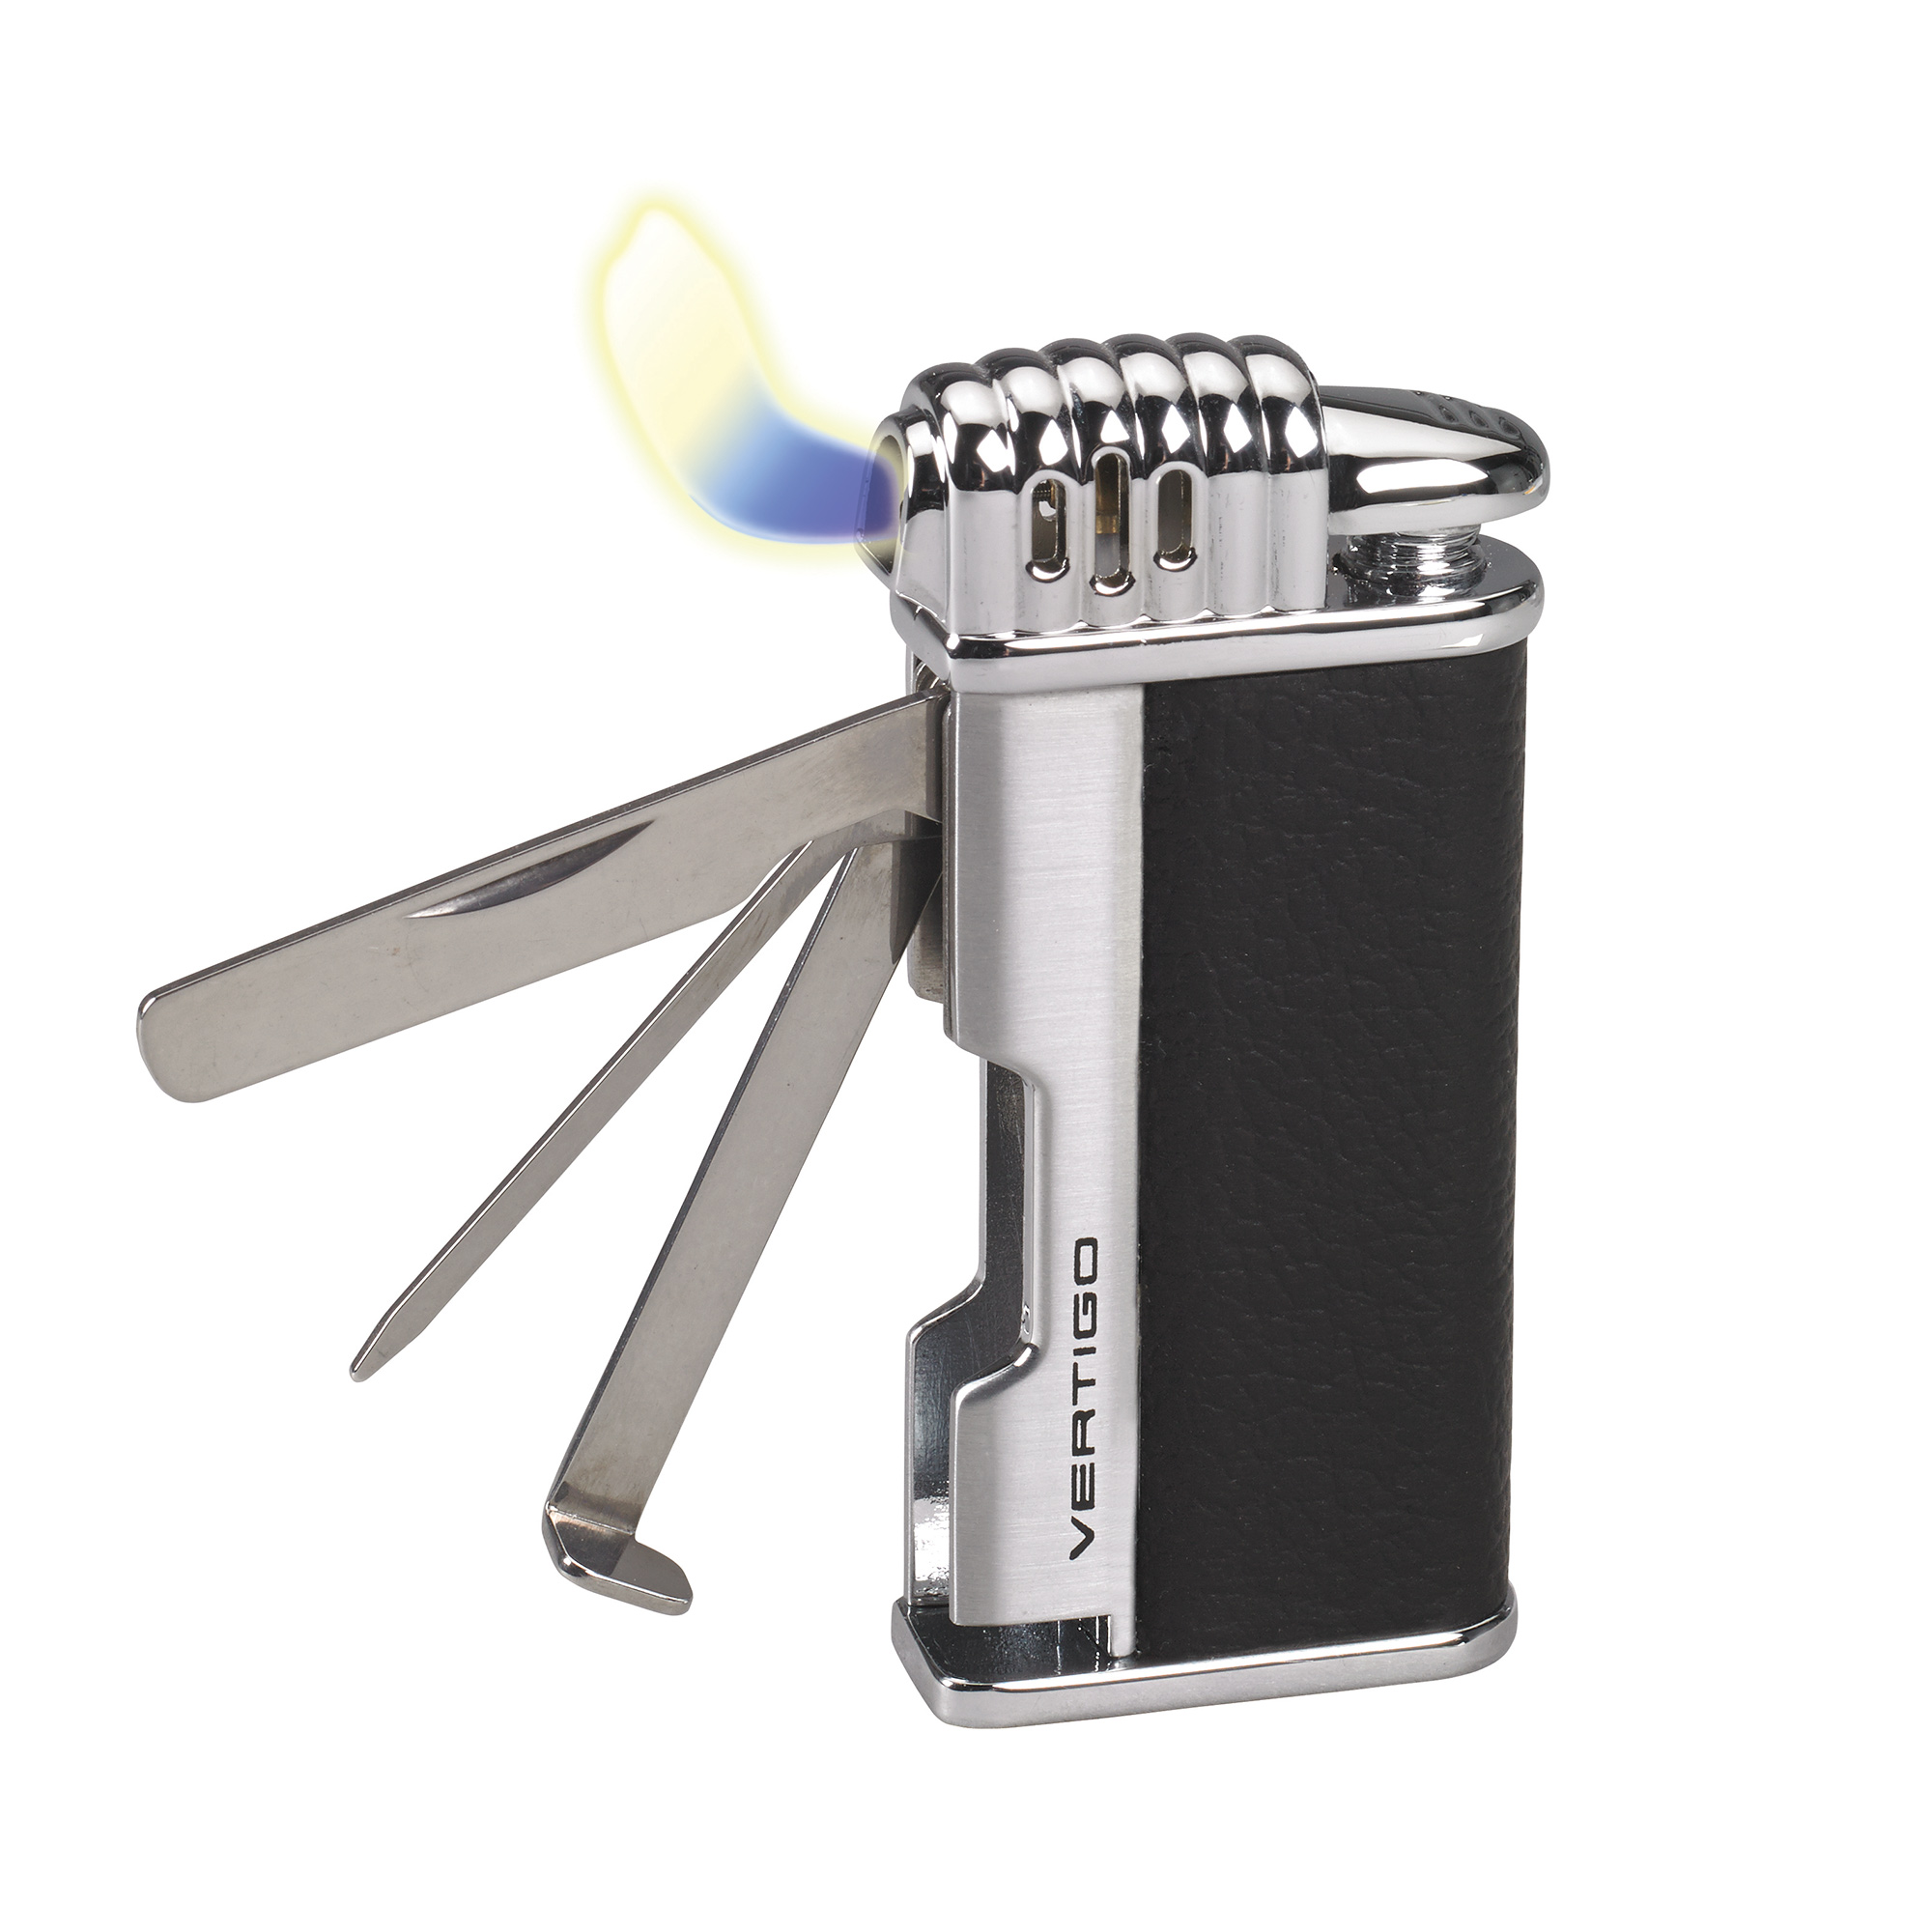 Vertigo Lighter – Lotus, Vertigo, Landshark and Margaritaville Smoking Accessories